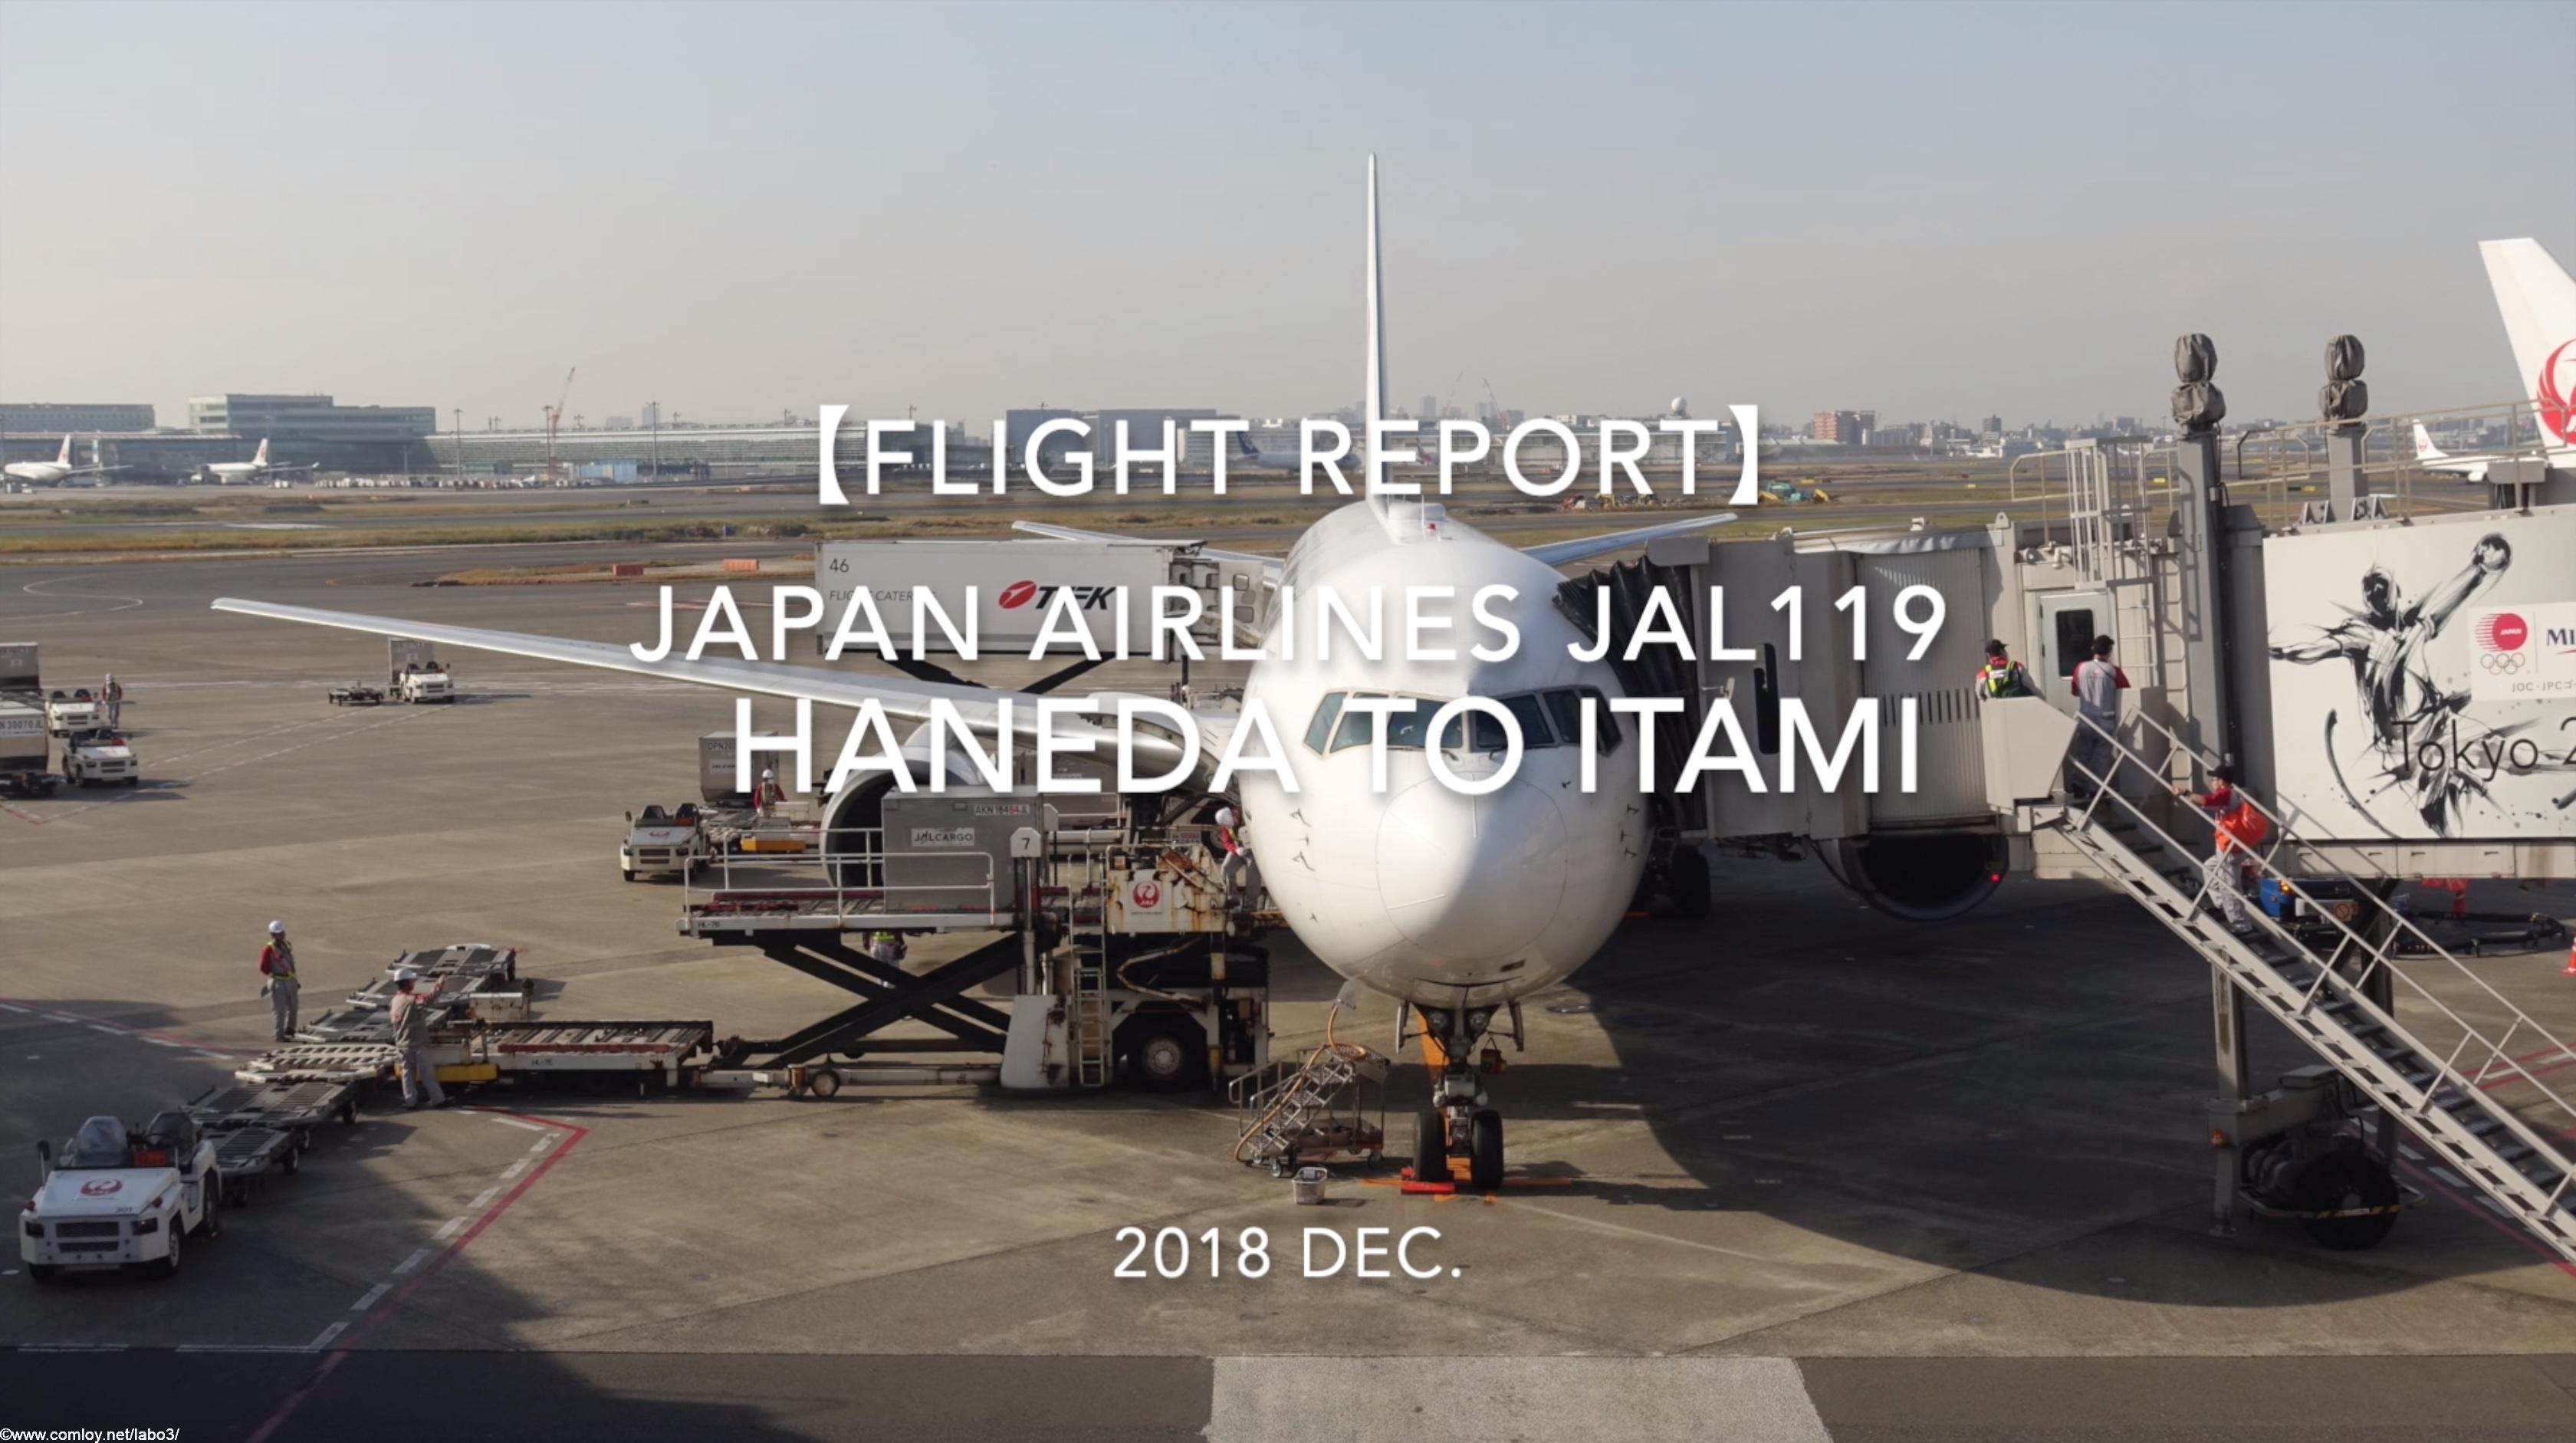 【Flight Report】 JAPAN AIRLINES JAL119 HANEDA TO ITAMI 2018 DEC 日本航空 羽田 - 伊丹 搭乗記